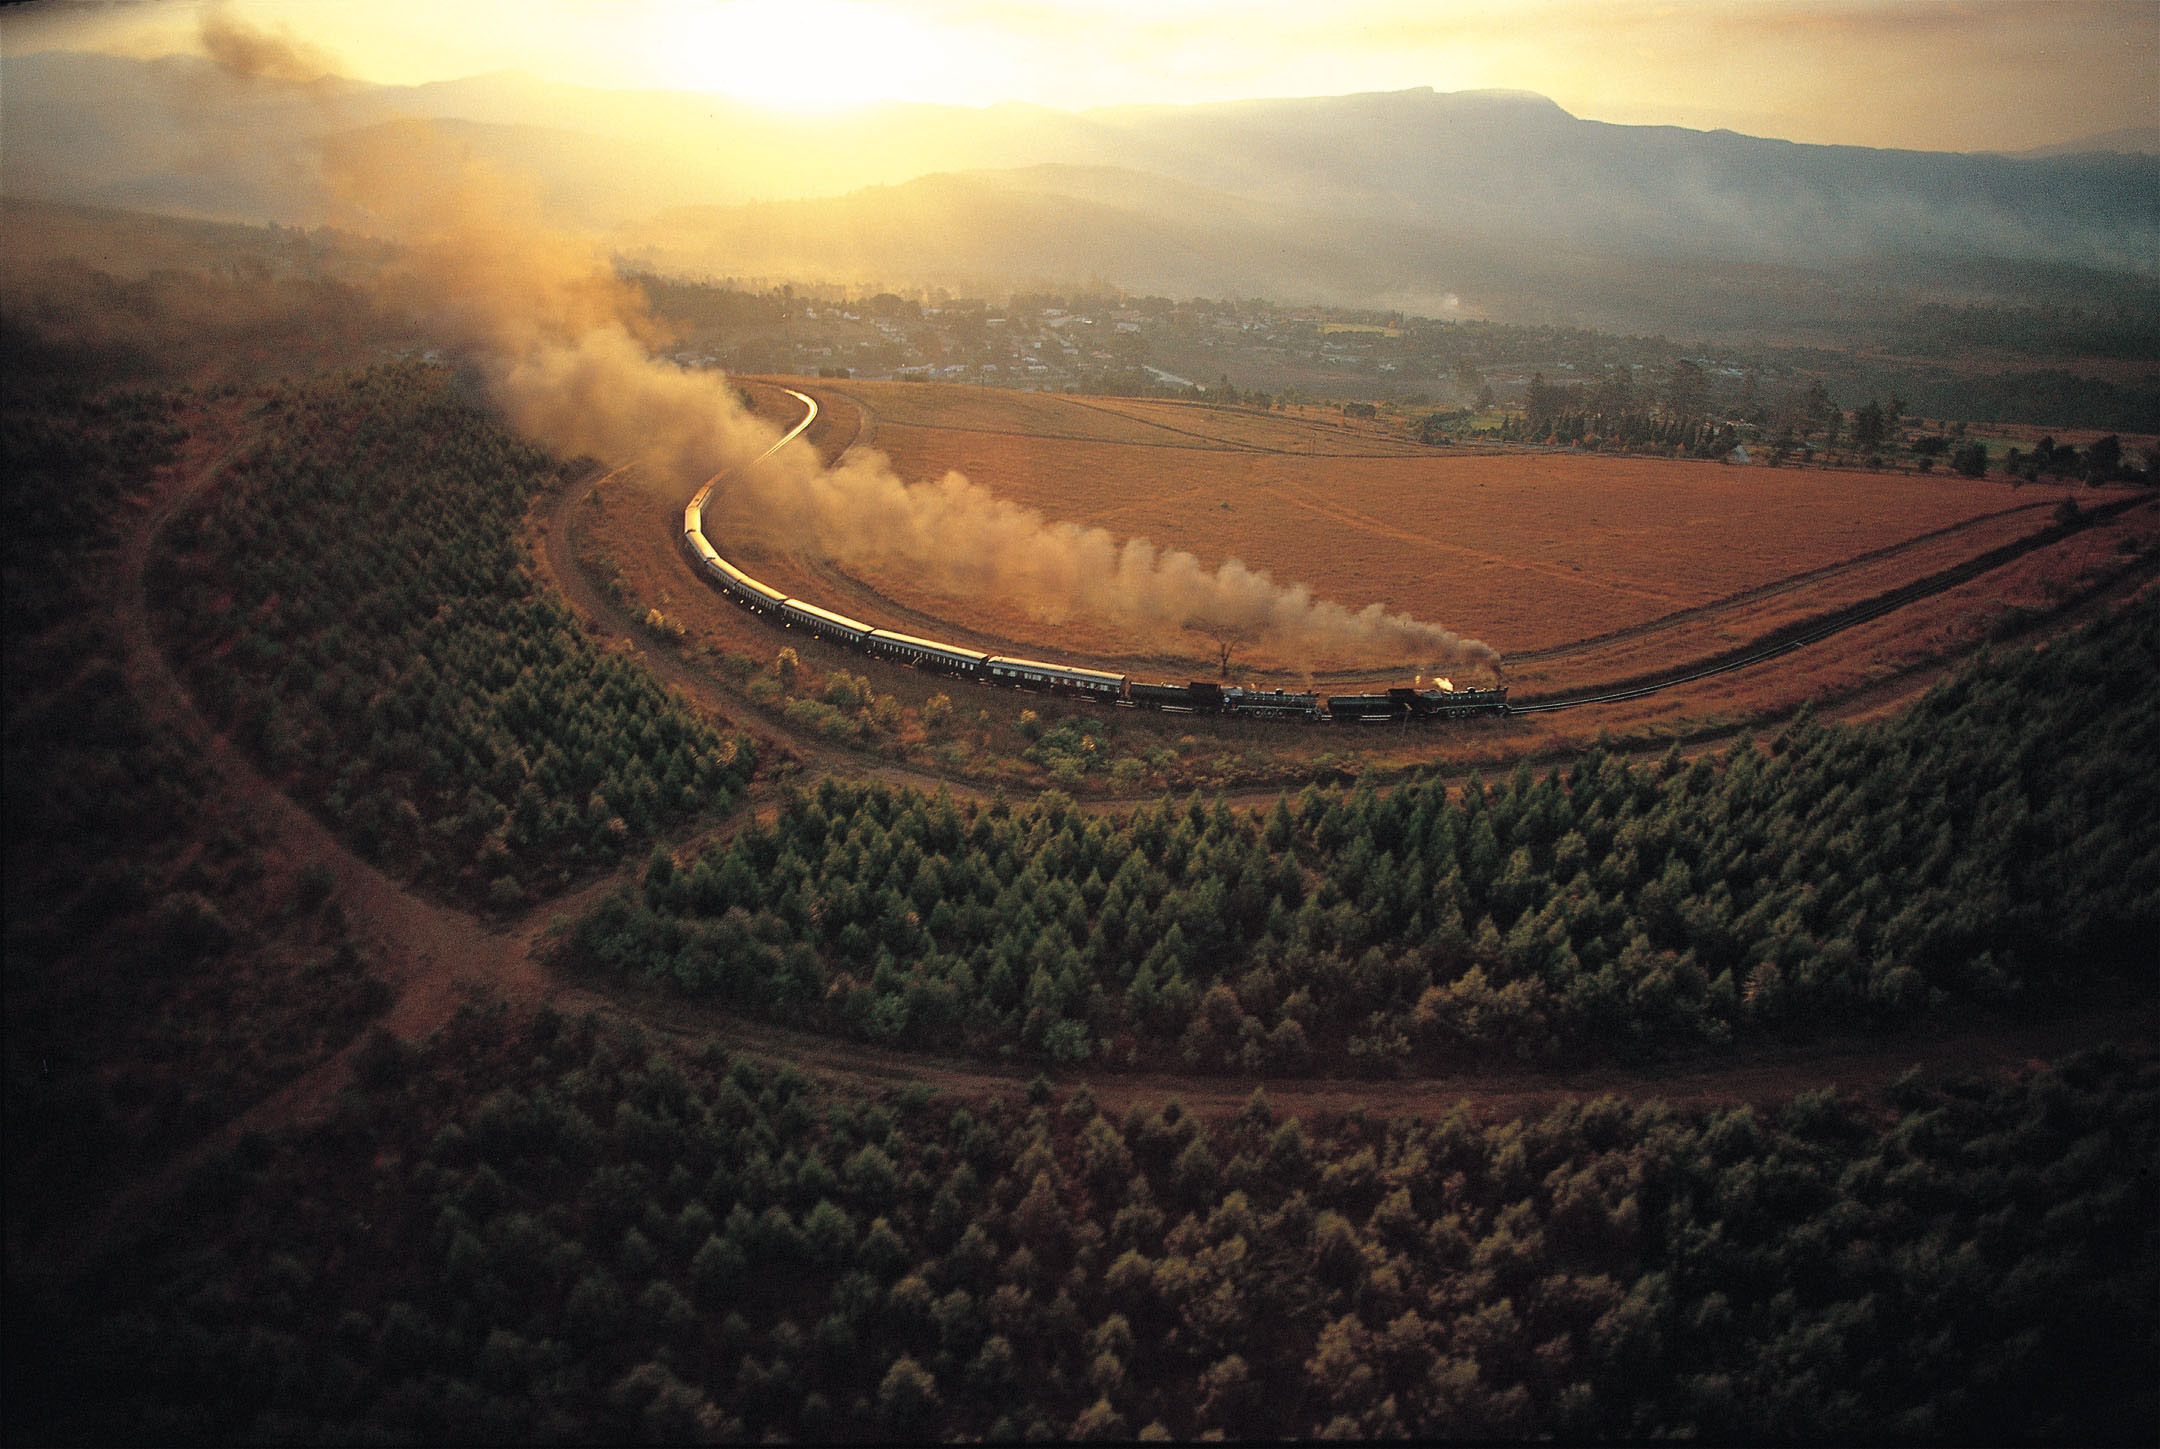 landscapes, trees, trains, railroad tracks, vehicles, countryside - desktop wallpaper